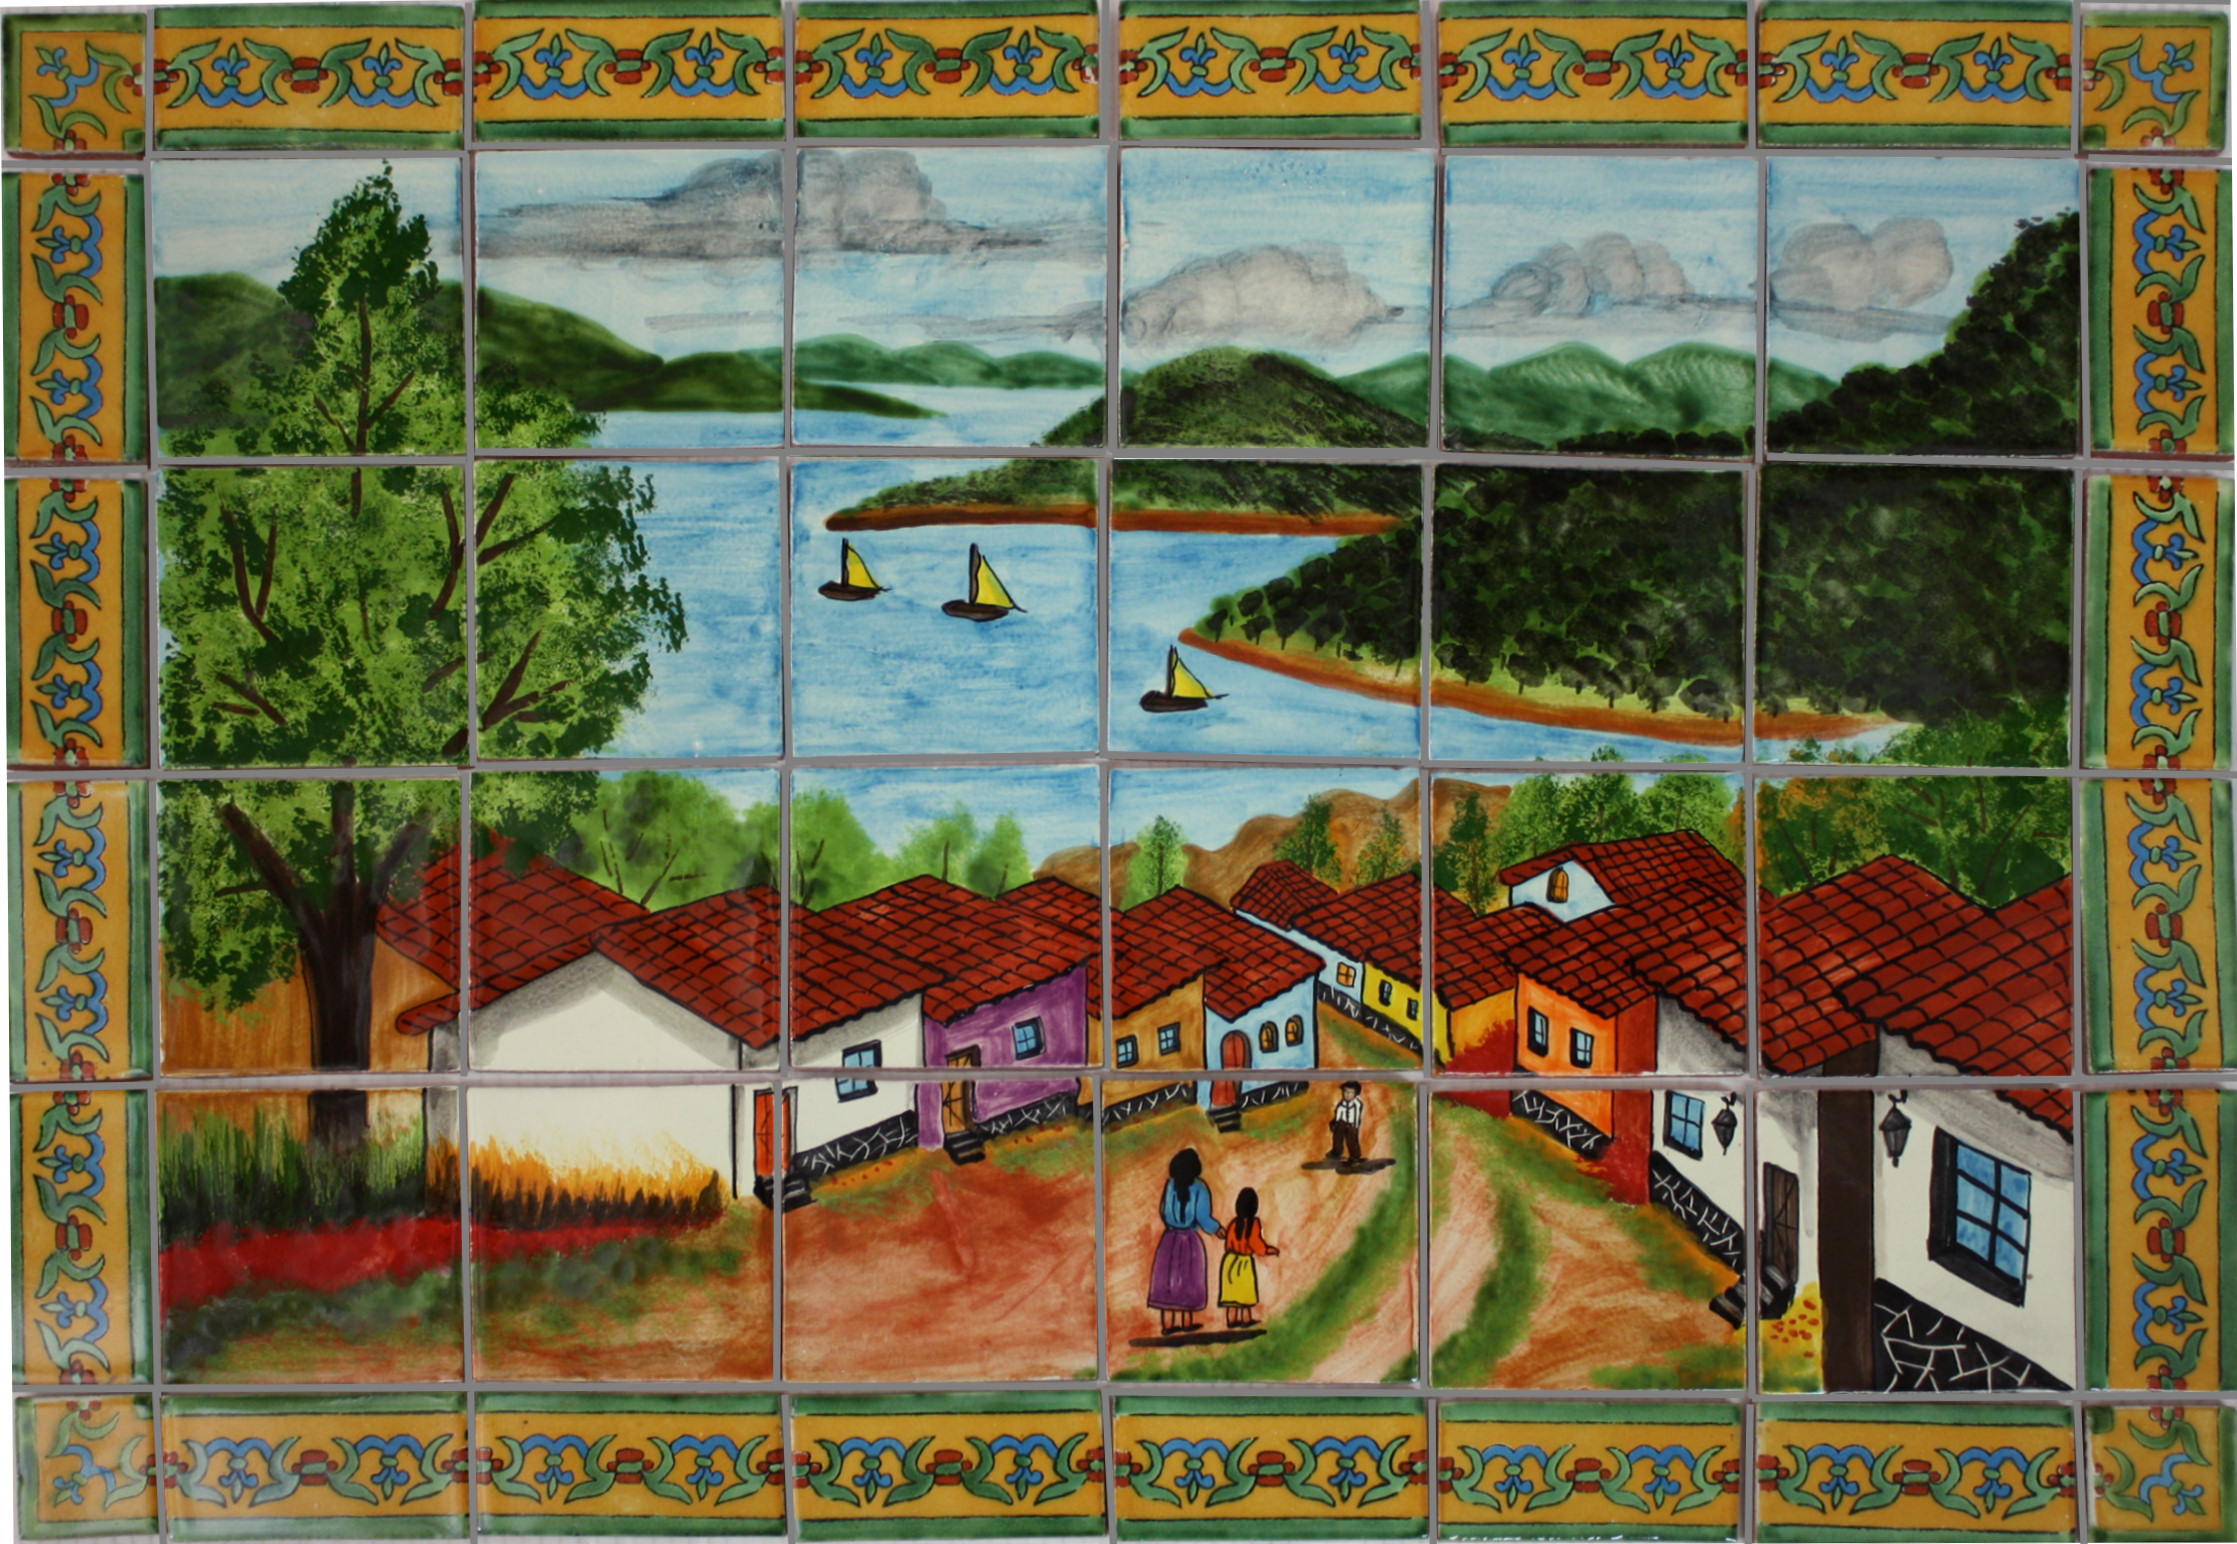 The Lake Talavera Tile Mural